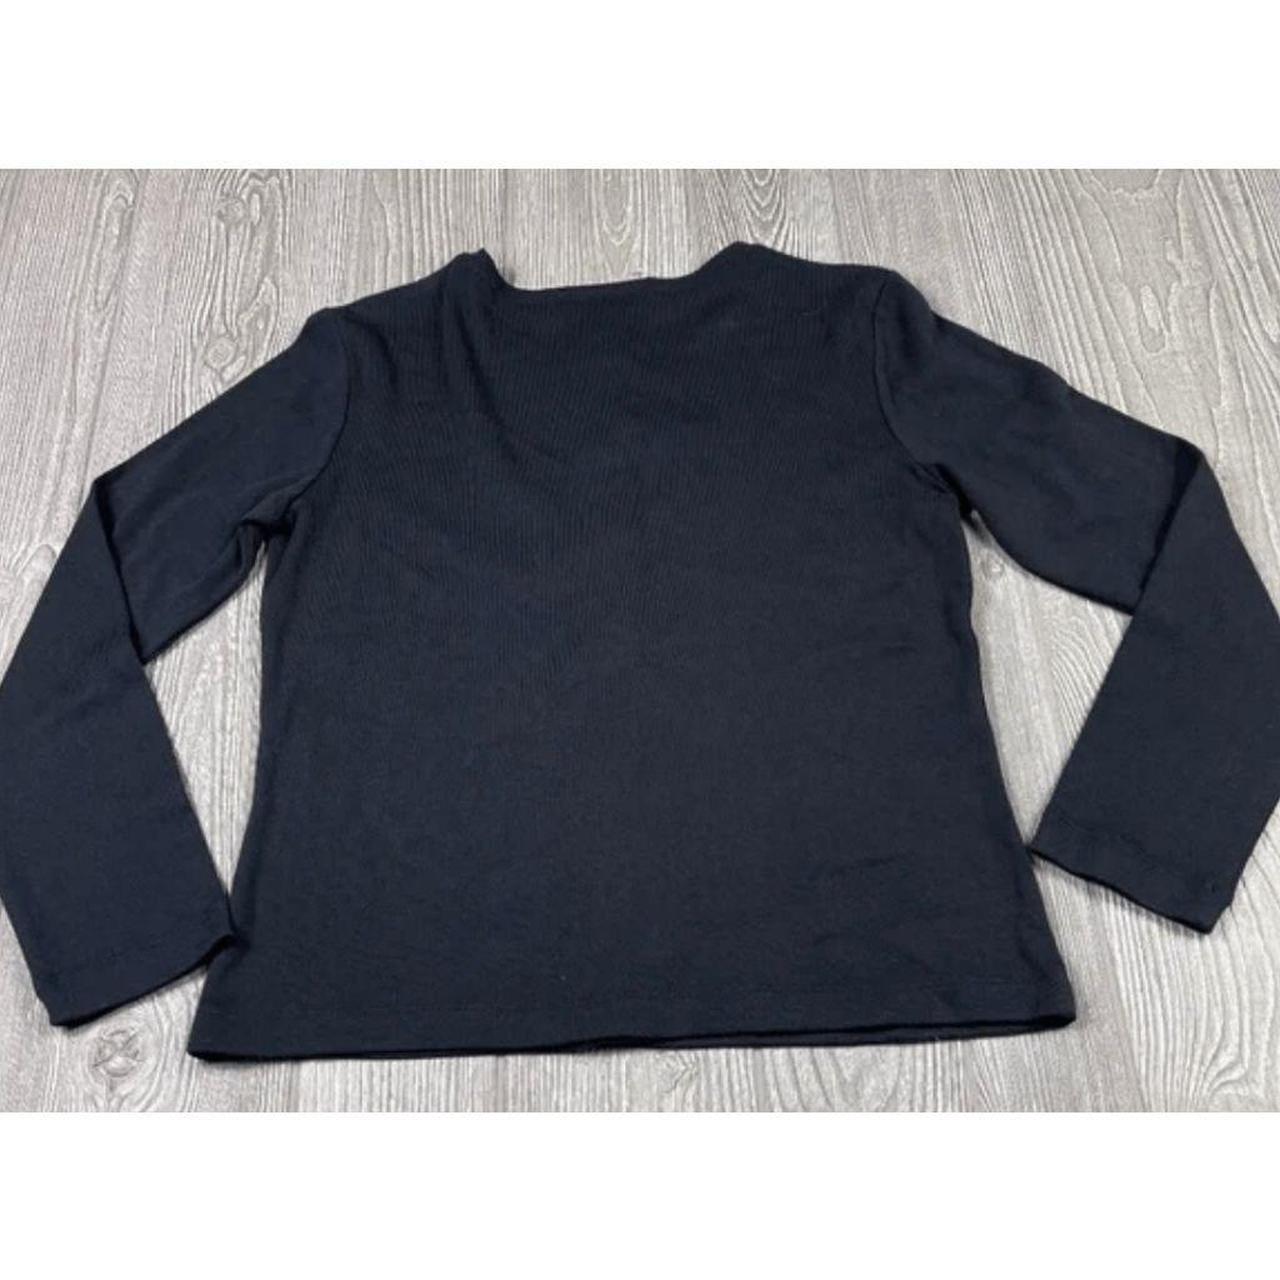 talbots black pima cotton button up cardigan sweater - Depop